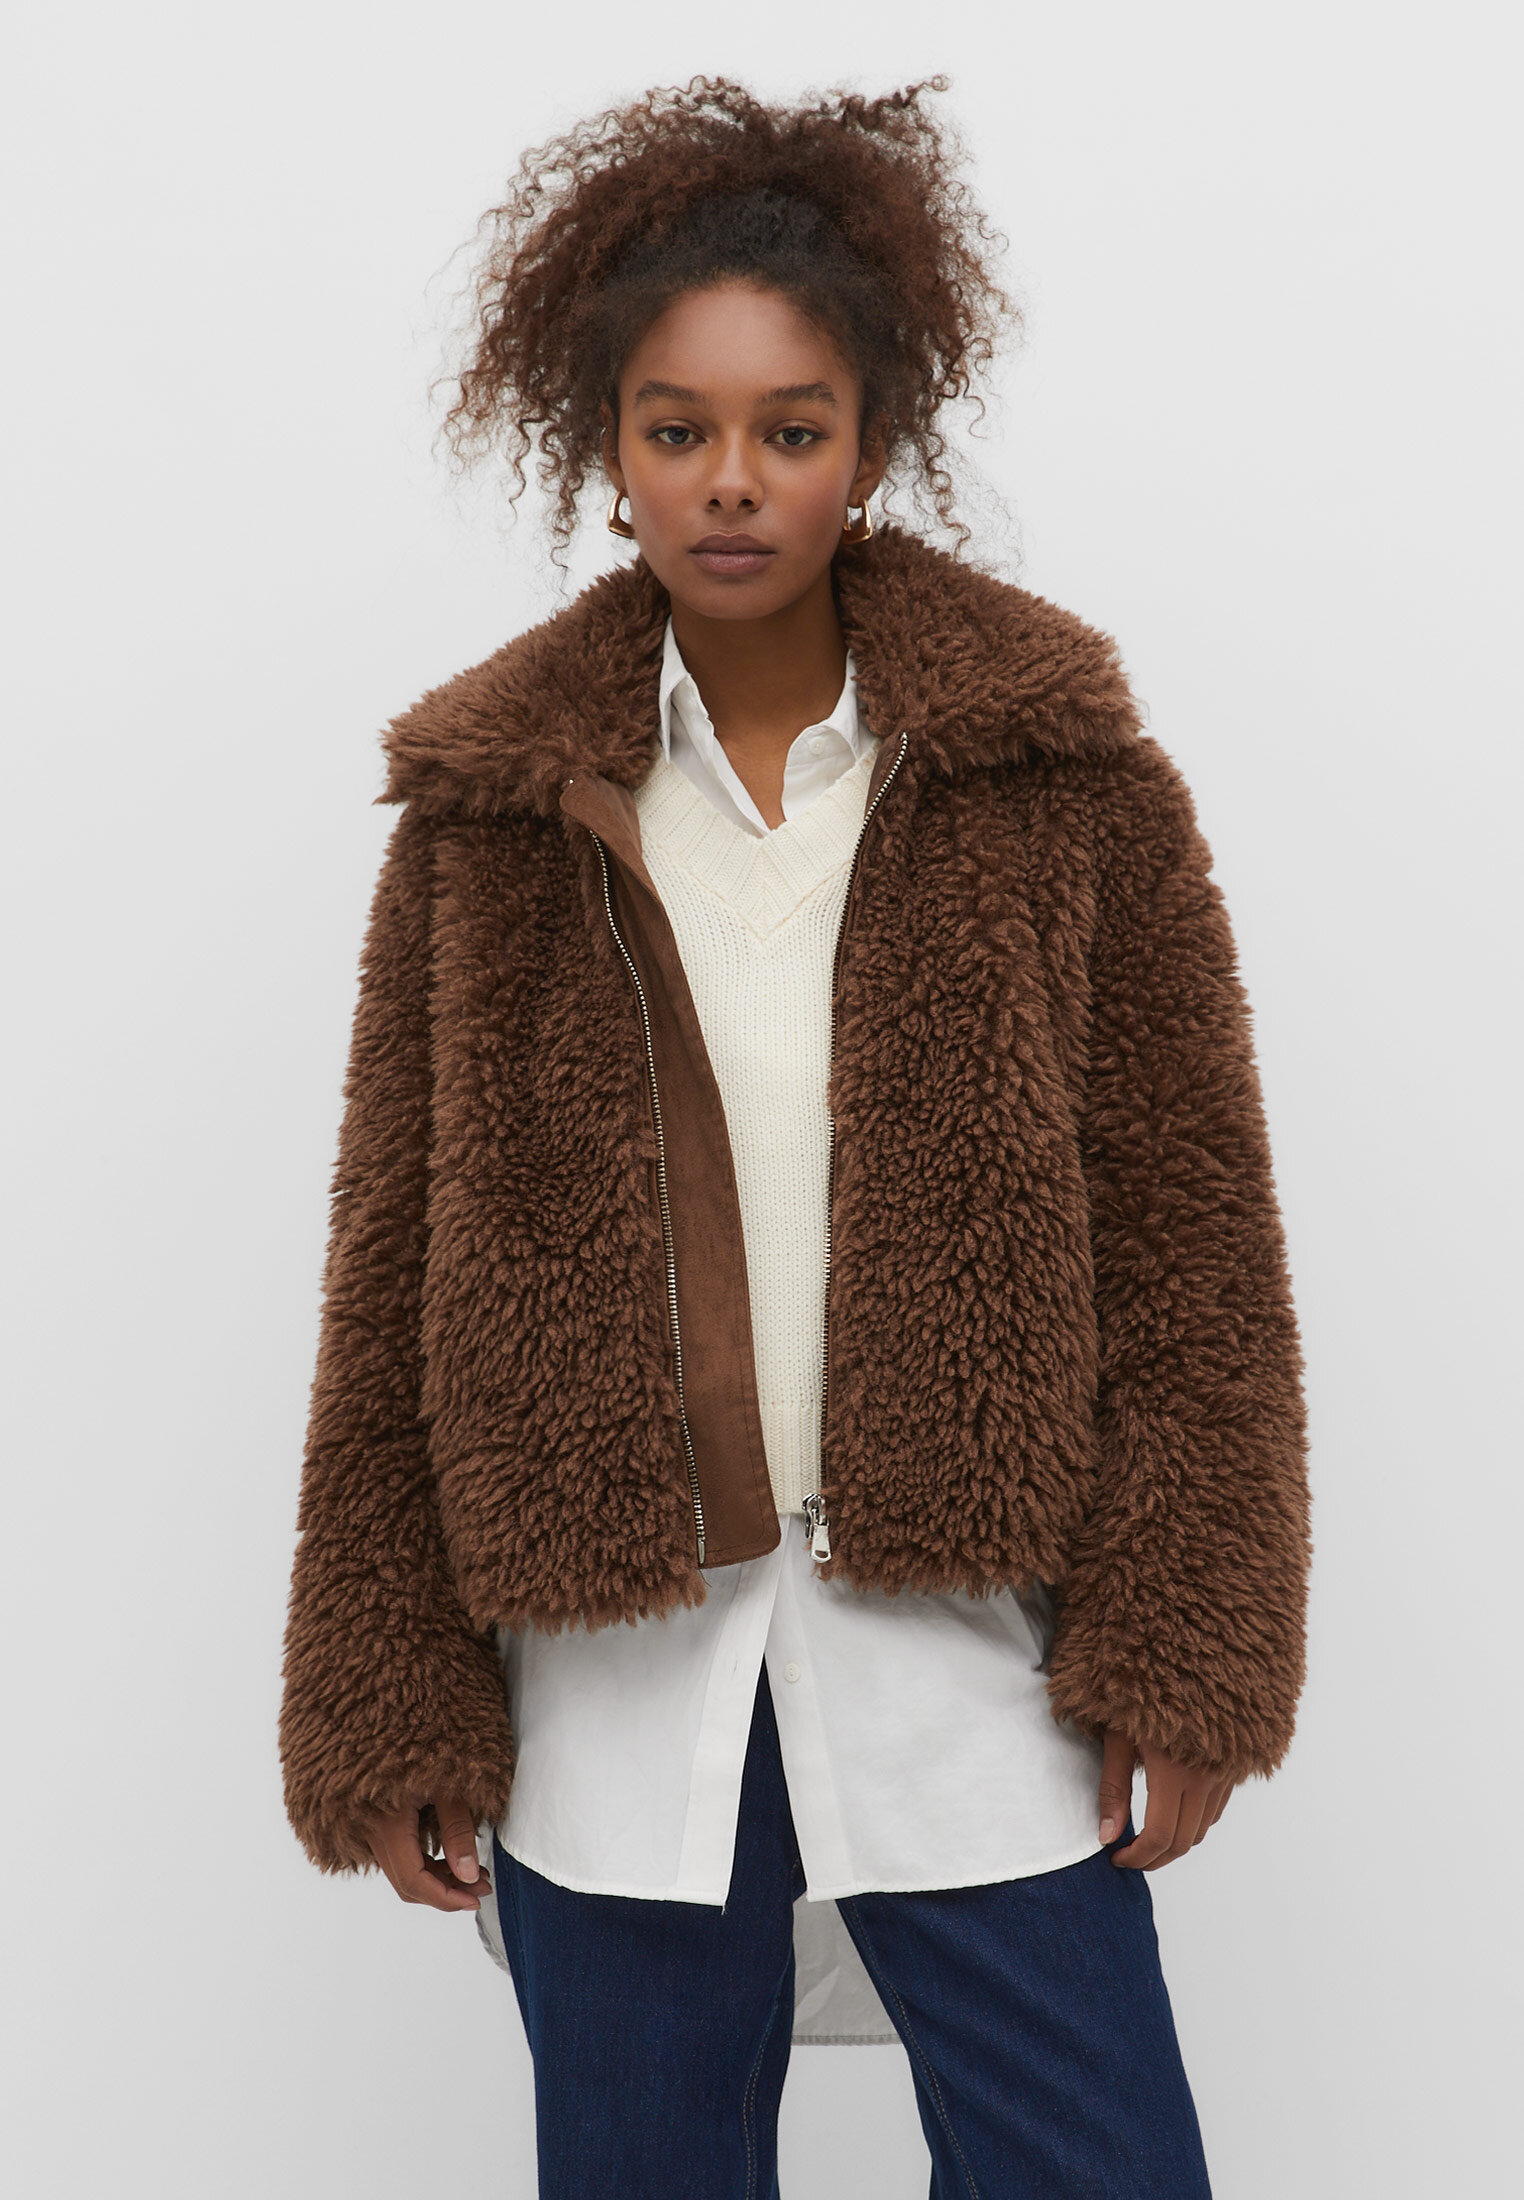 Faux fur jackets you'll feel like a movie star in